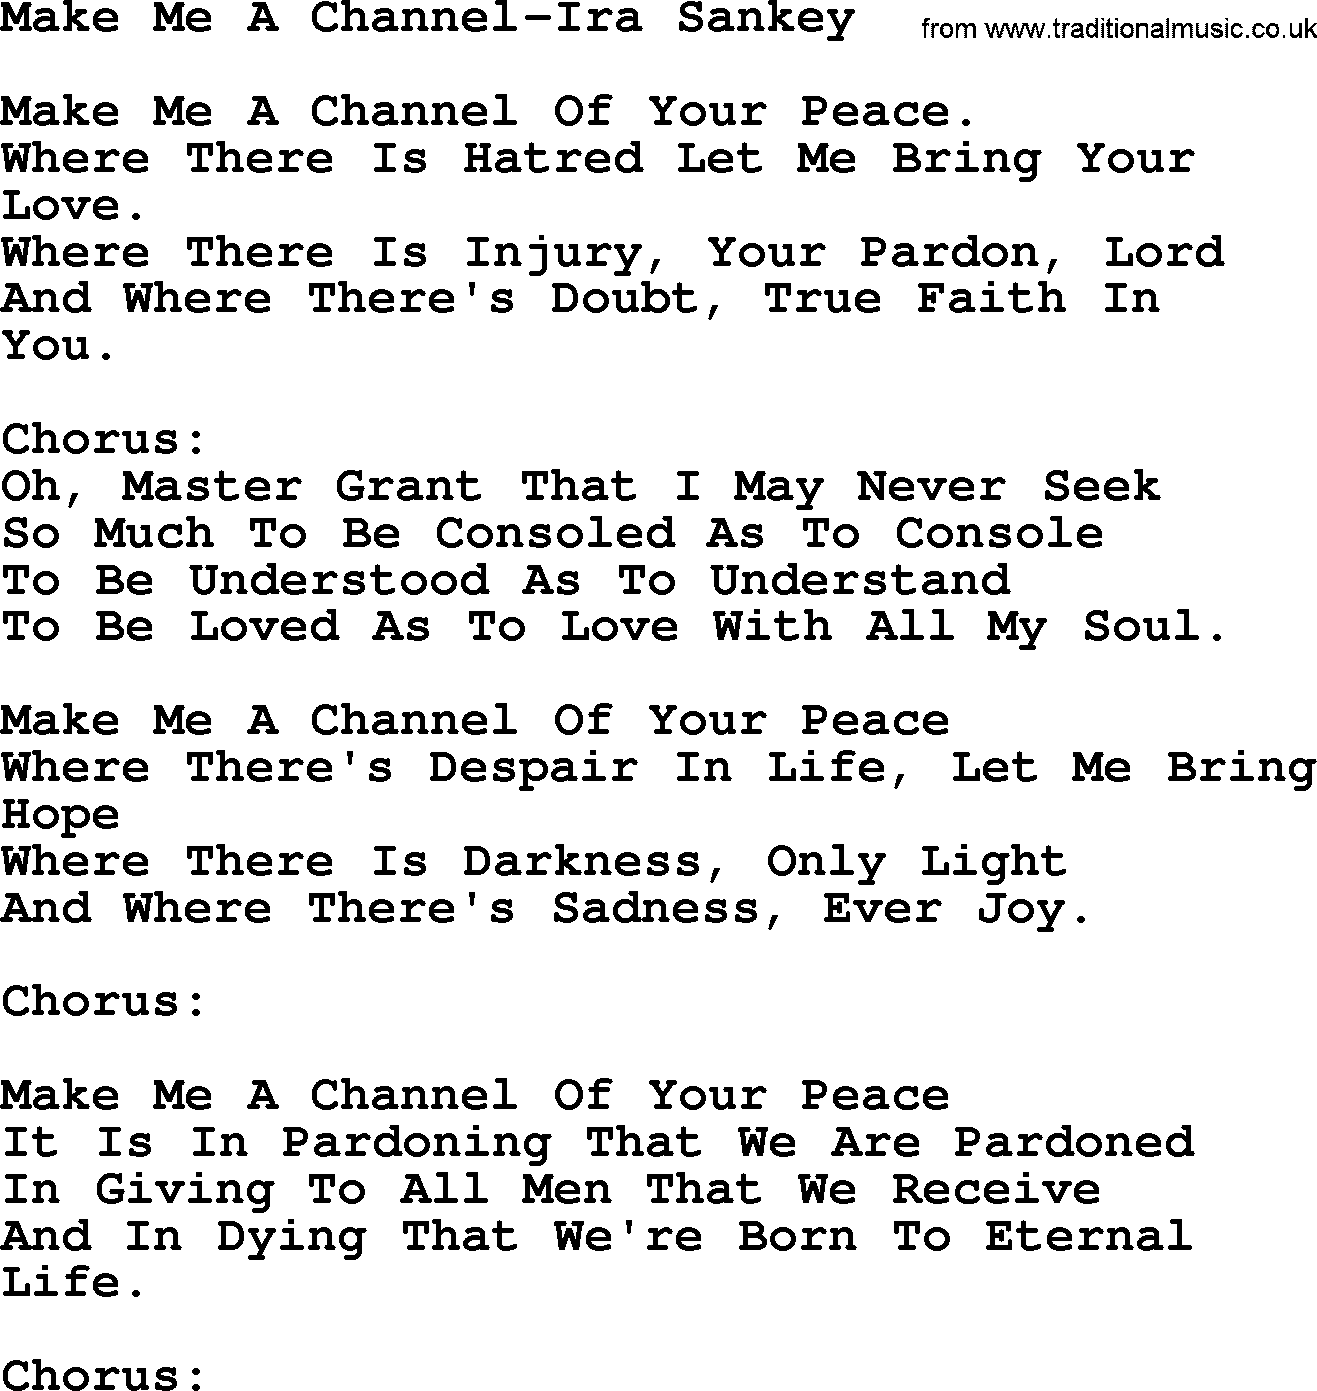 Ira Sankey hymn: Make Me A Channel-Ira Sankey, lyrics